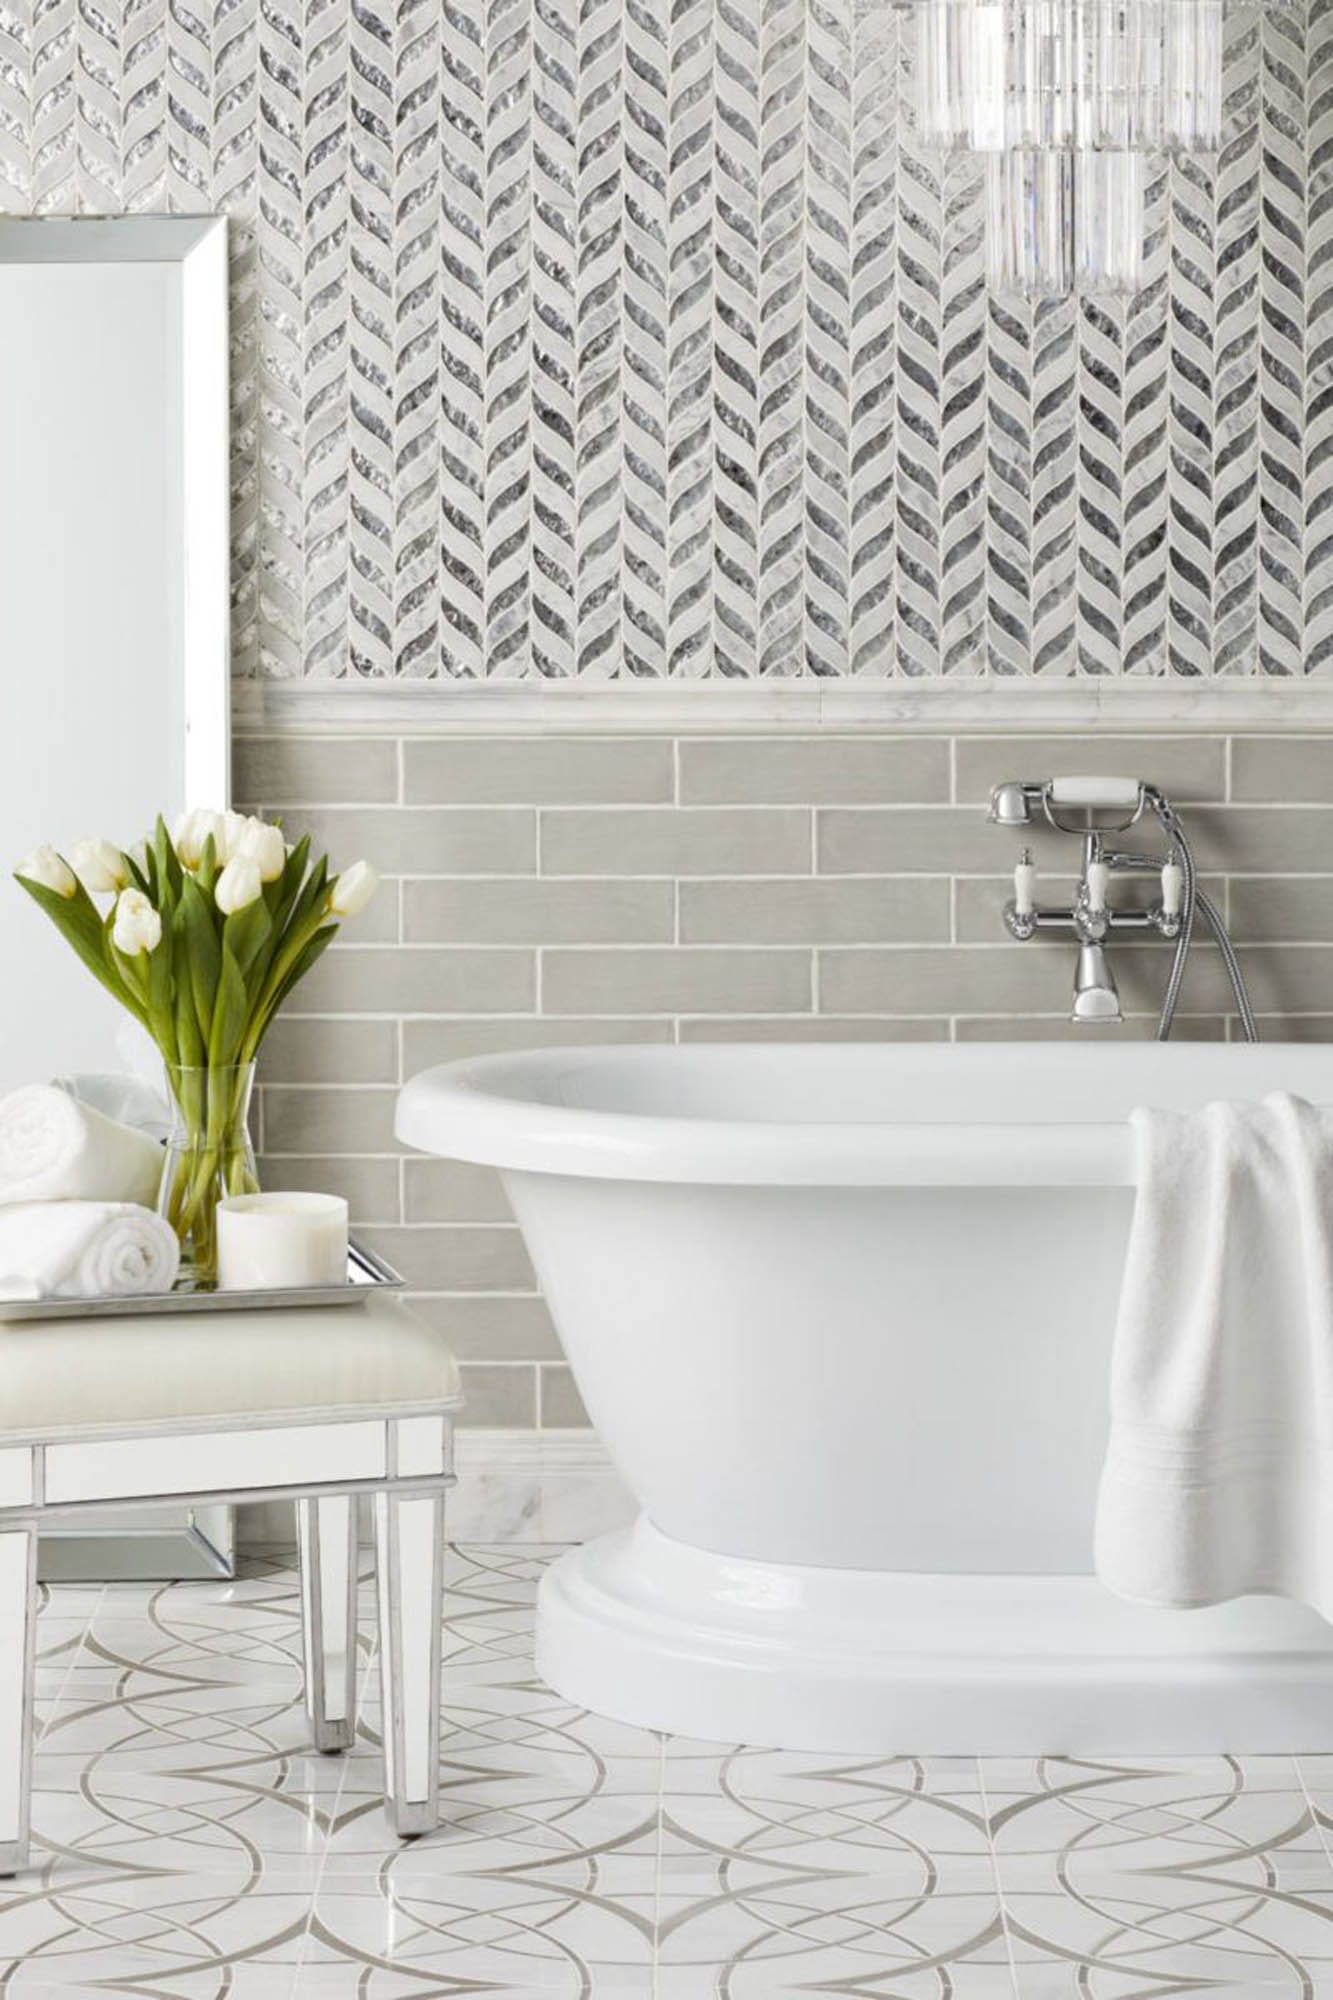 Bathroom tile ideas: 31 designs inspired by bathroom tiles |